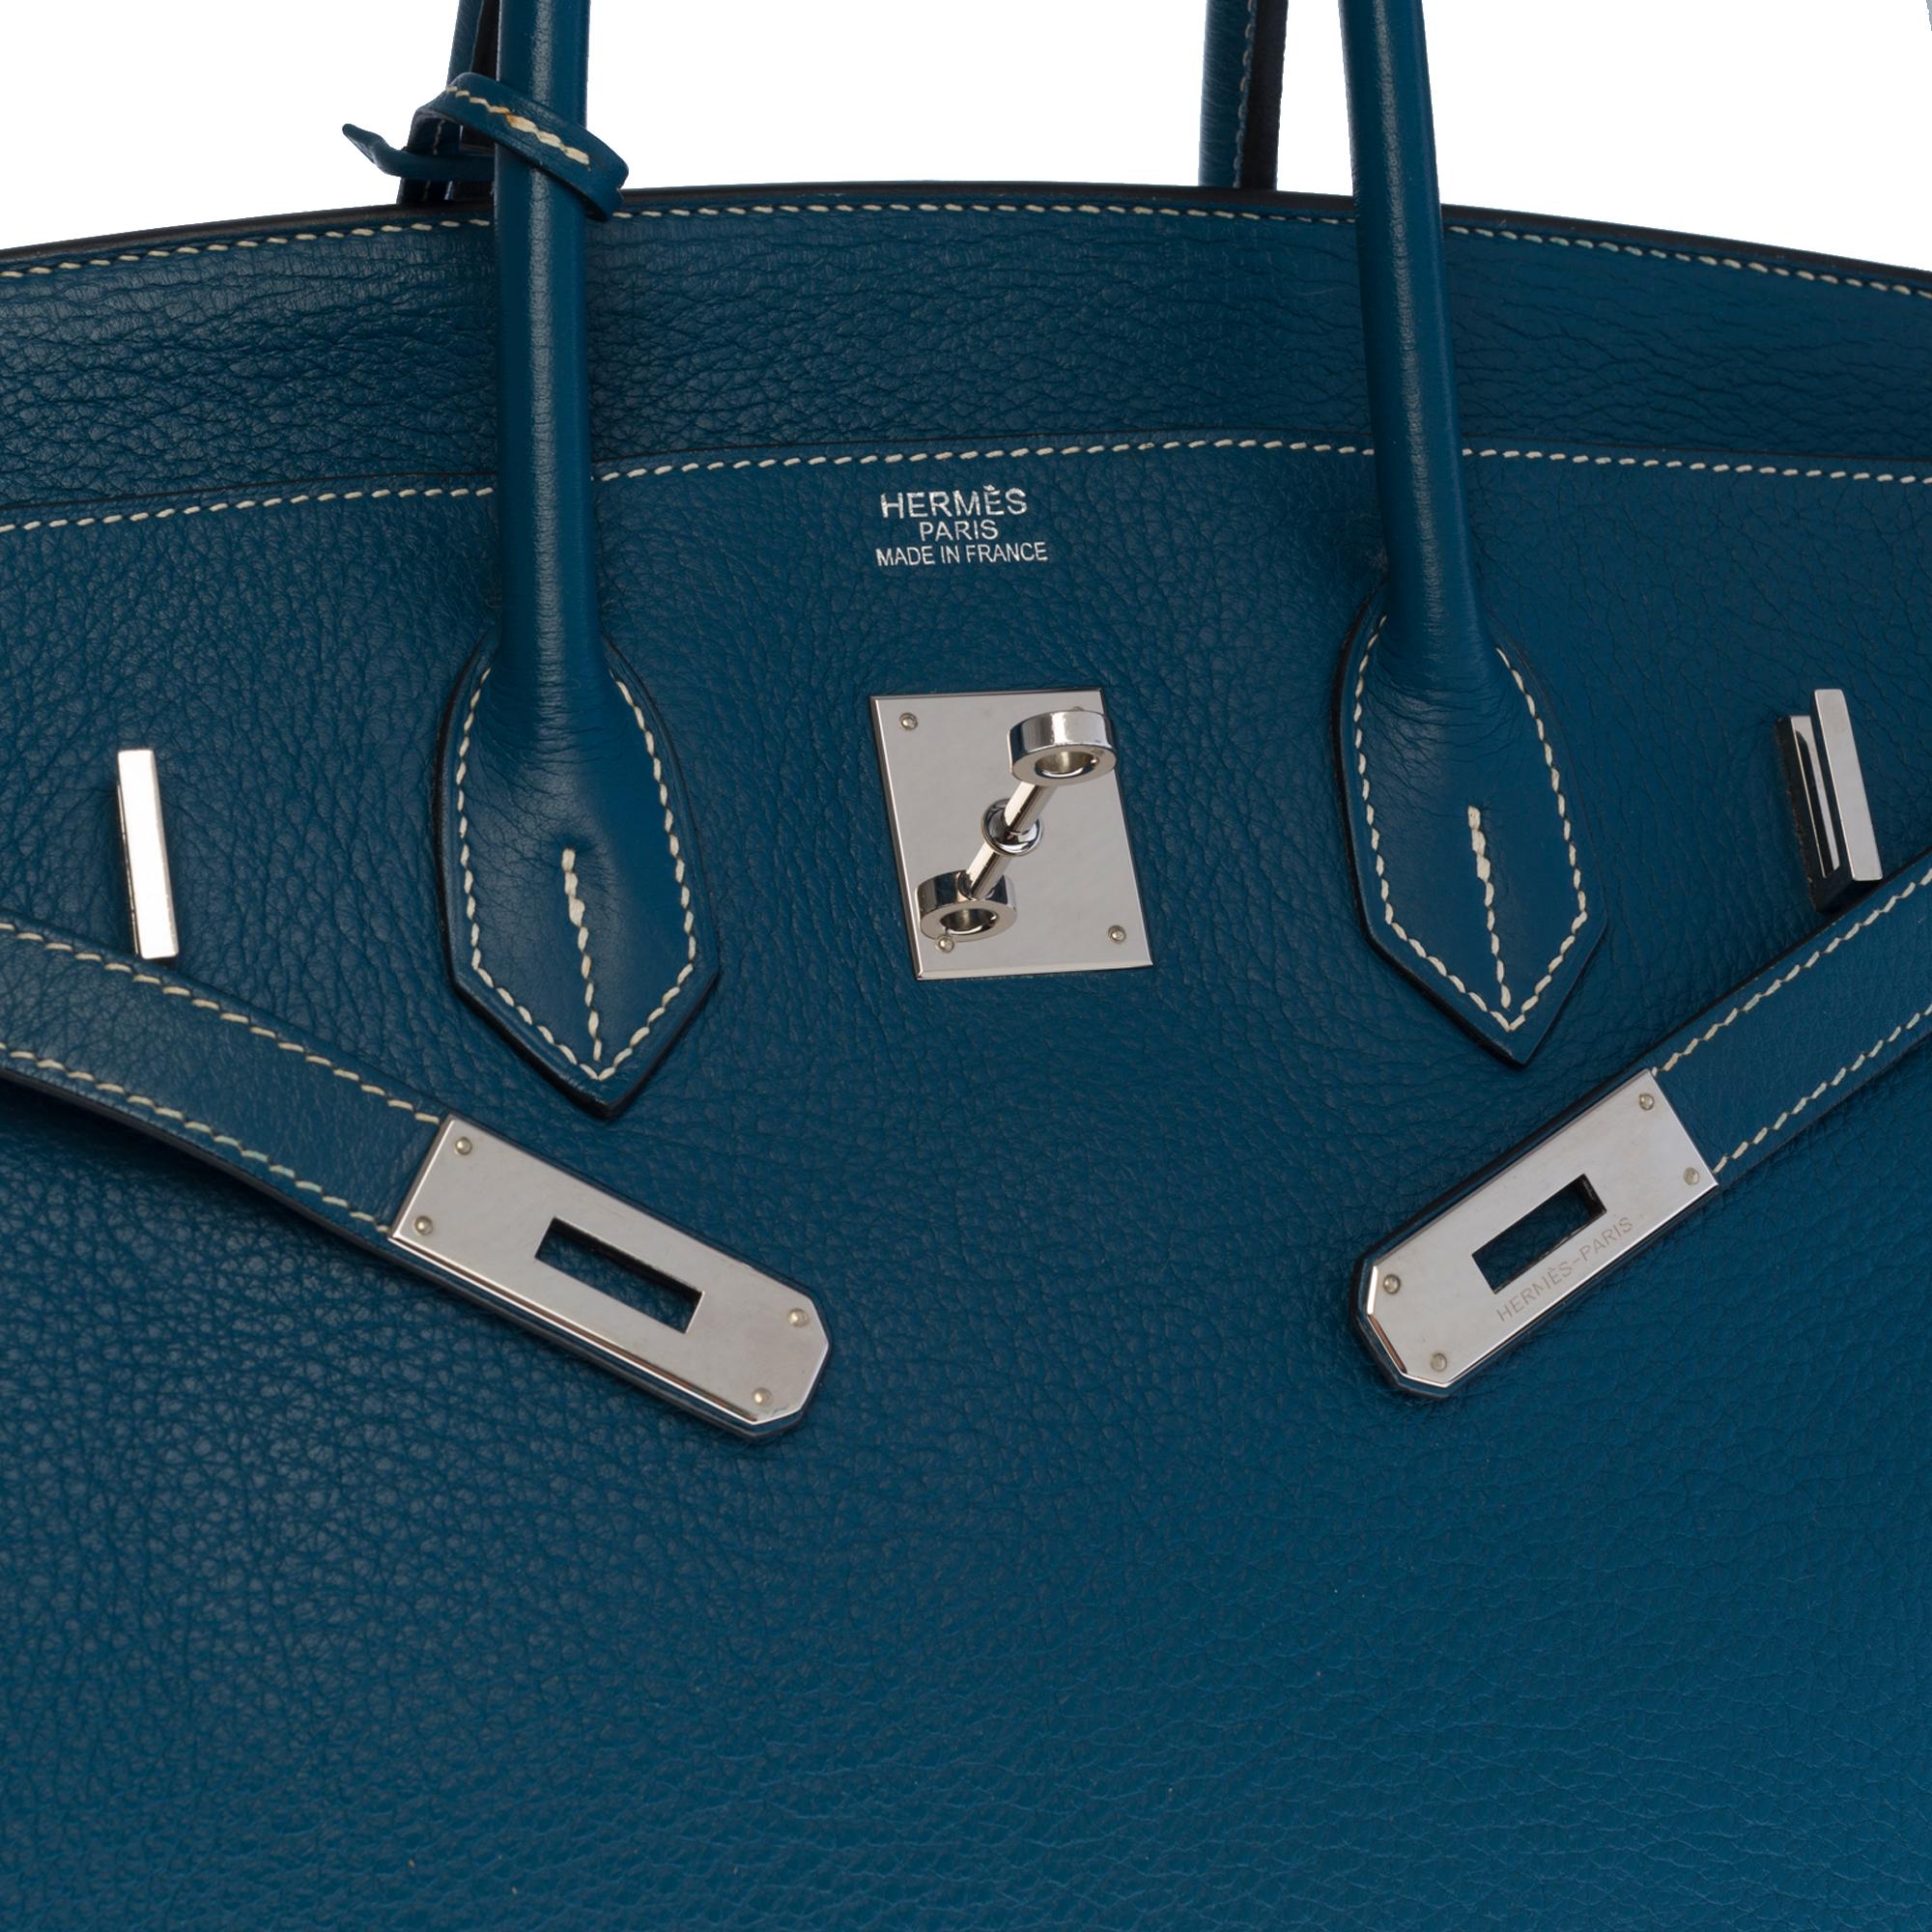 Women's or Men's Stunning Hermès Birkin 35 handbag in Blue Thalassa Taurillon leather, SHW